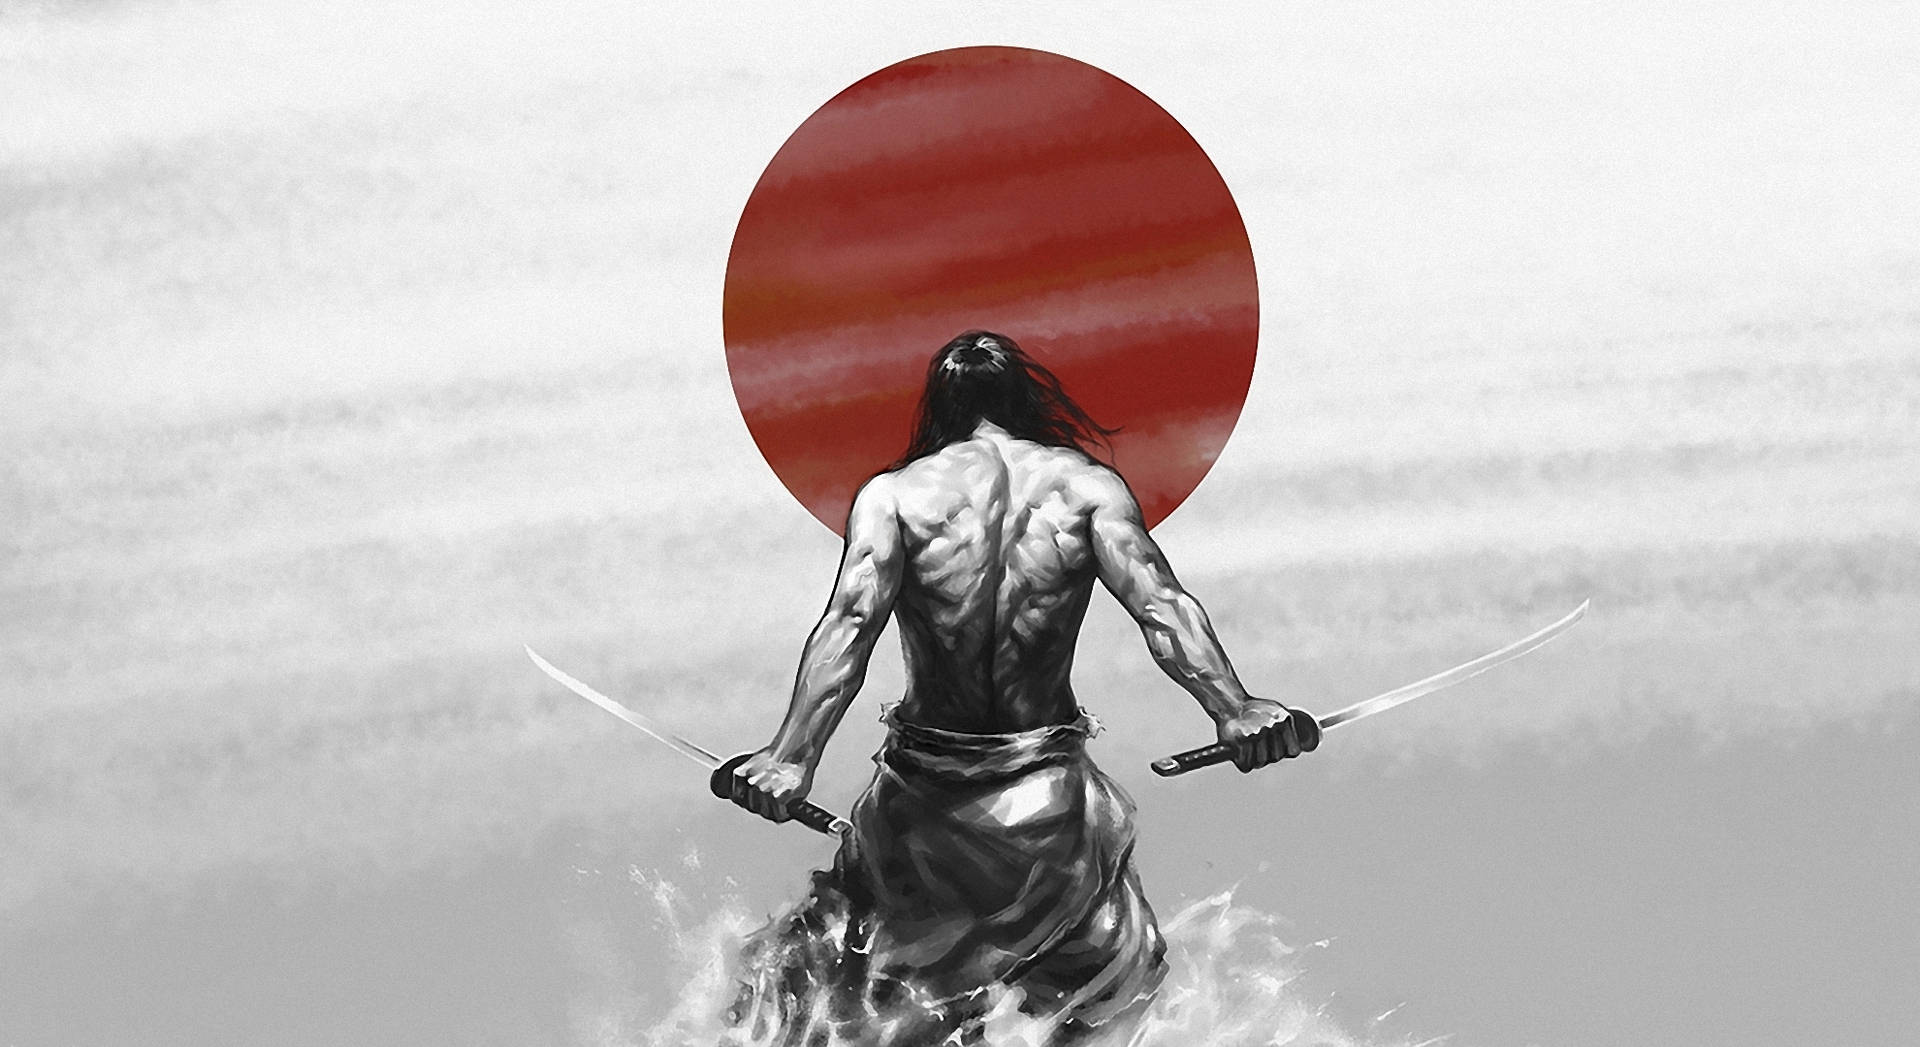 Free Samurai Wallpaper Downloads, Samurai Wallpaper for FREE